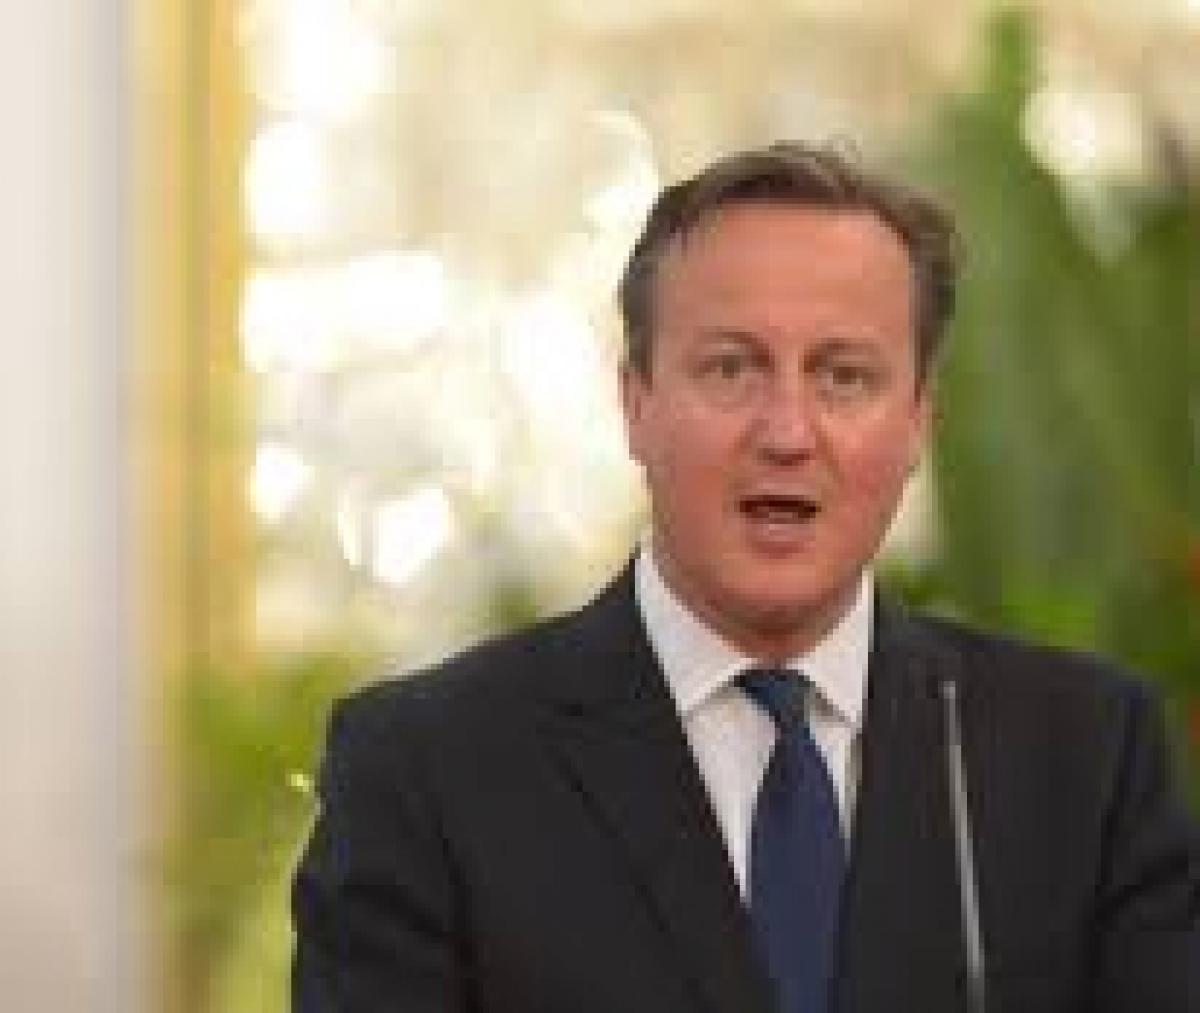 Cameron, Razak talks may focus on battling corruption